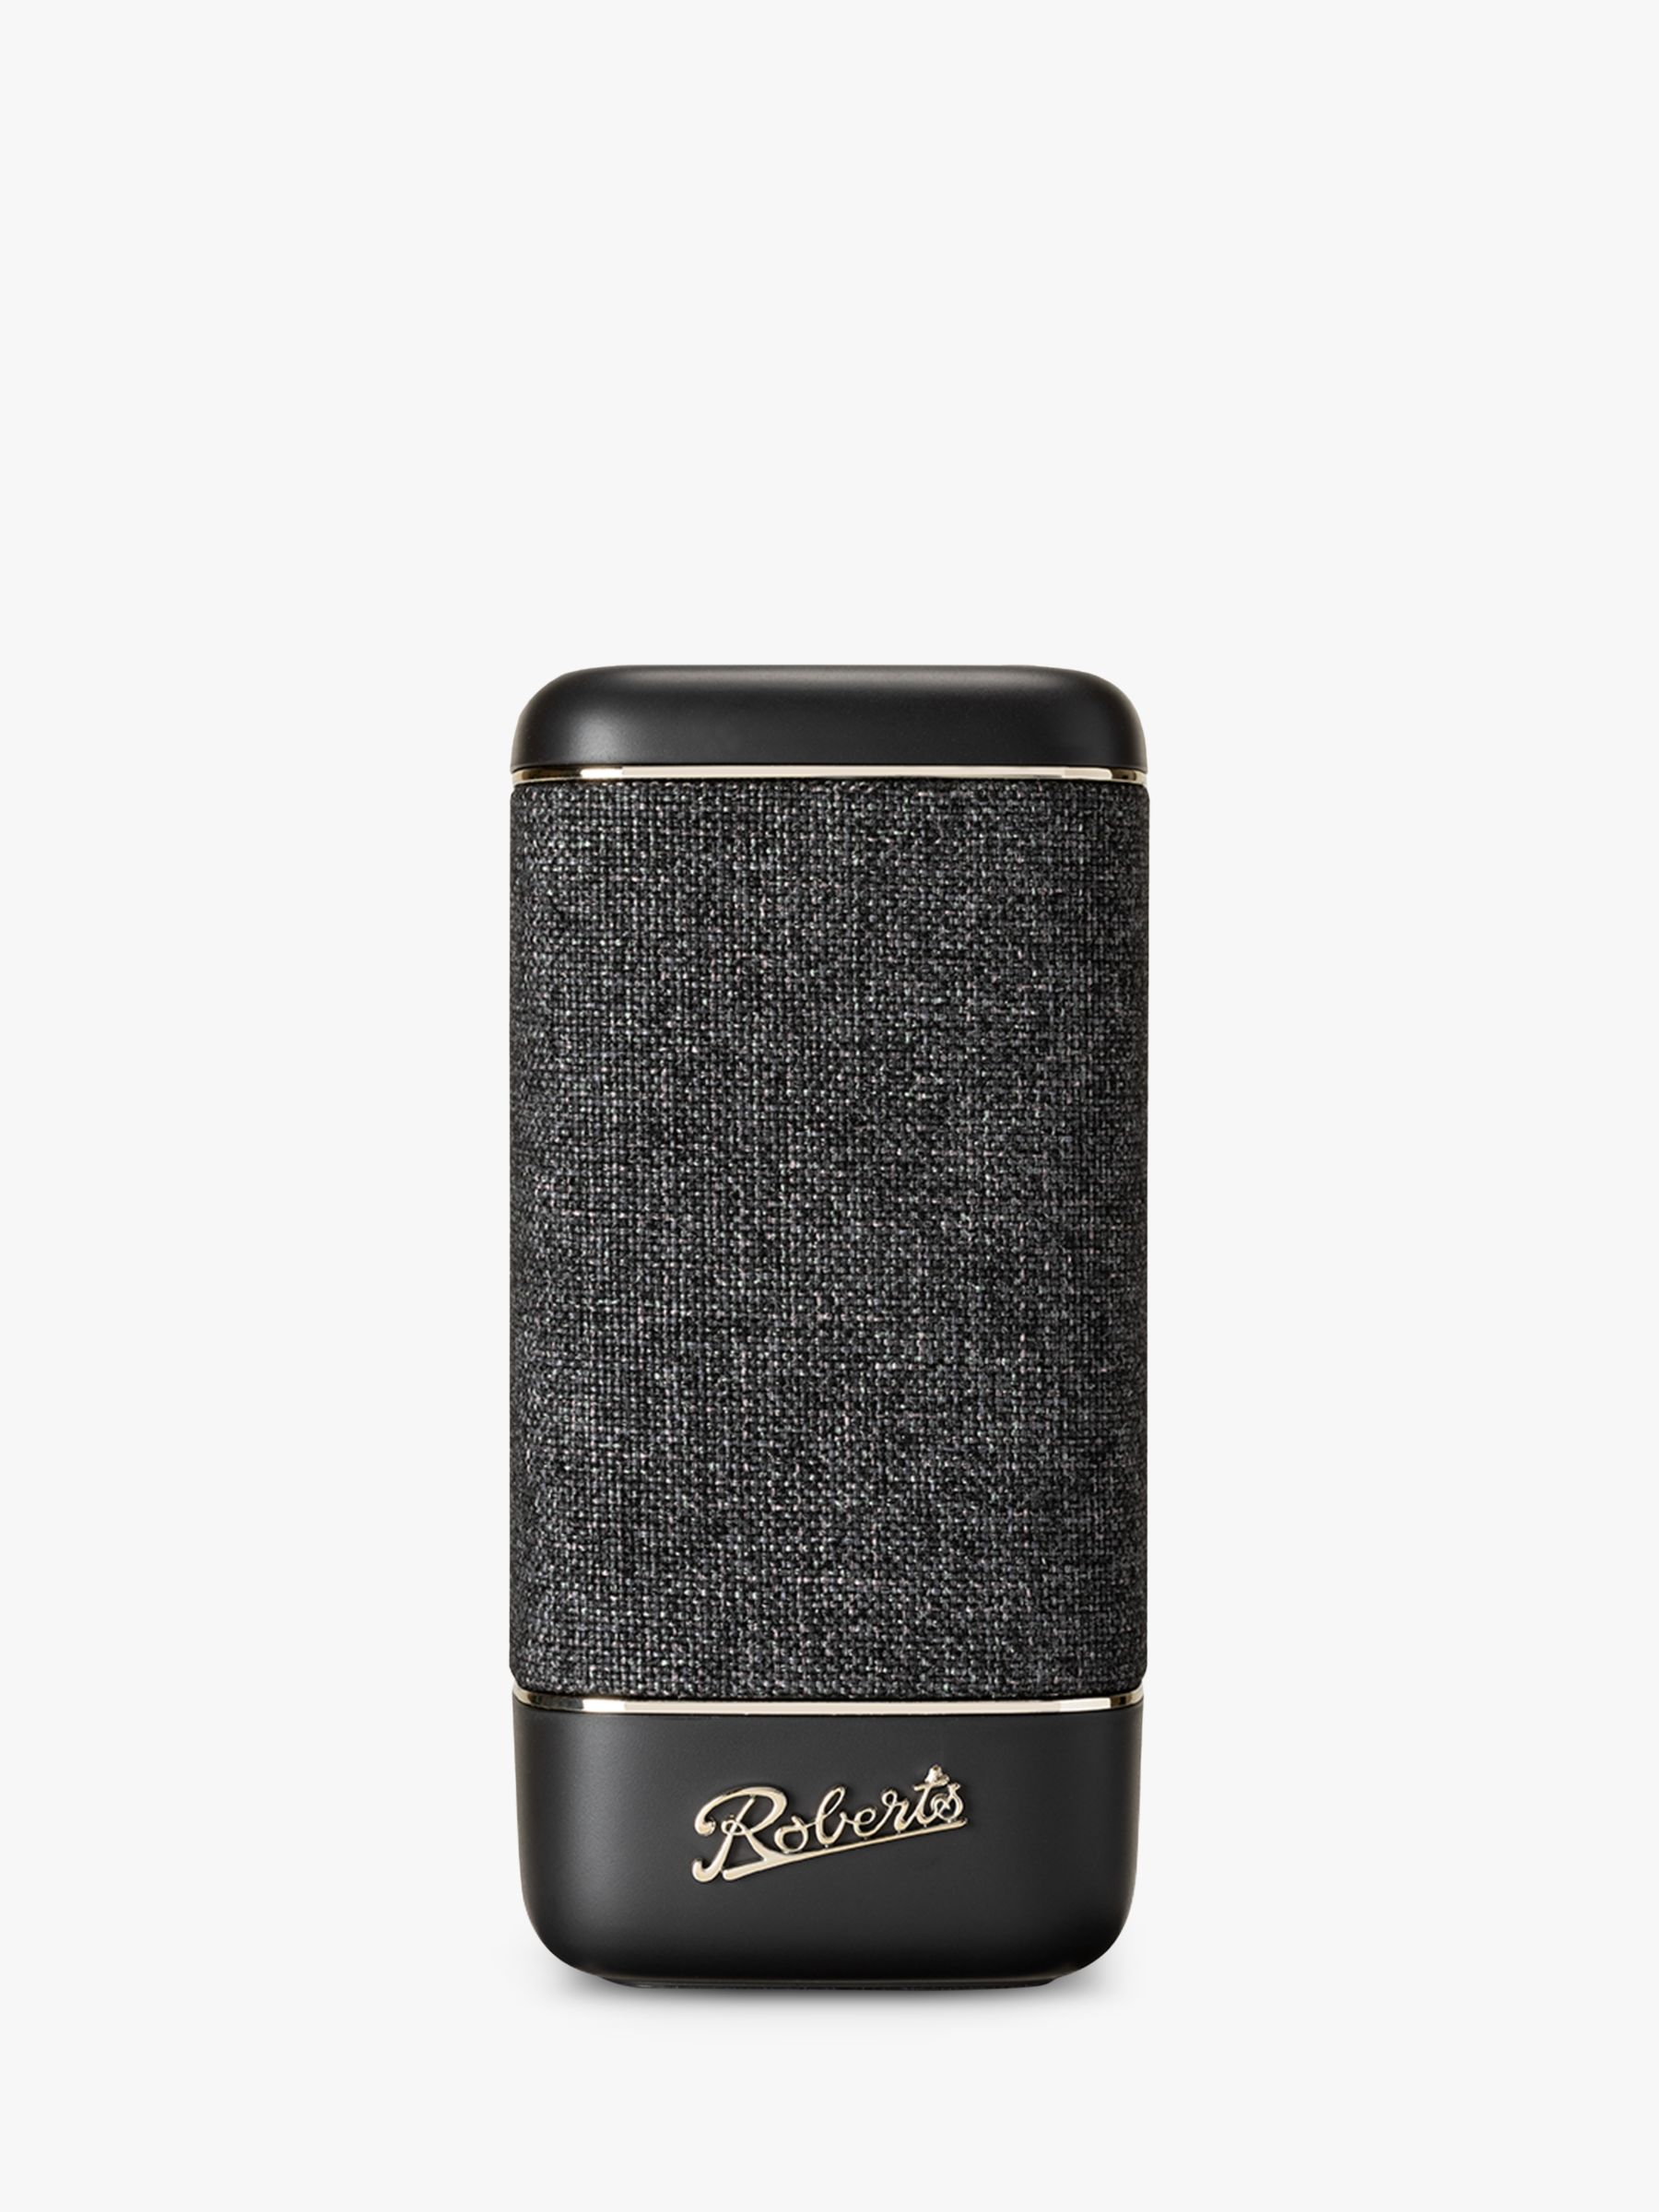 Roberts Beacon 330 Portable Bluetooth Speaker, Black